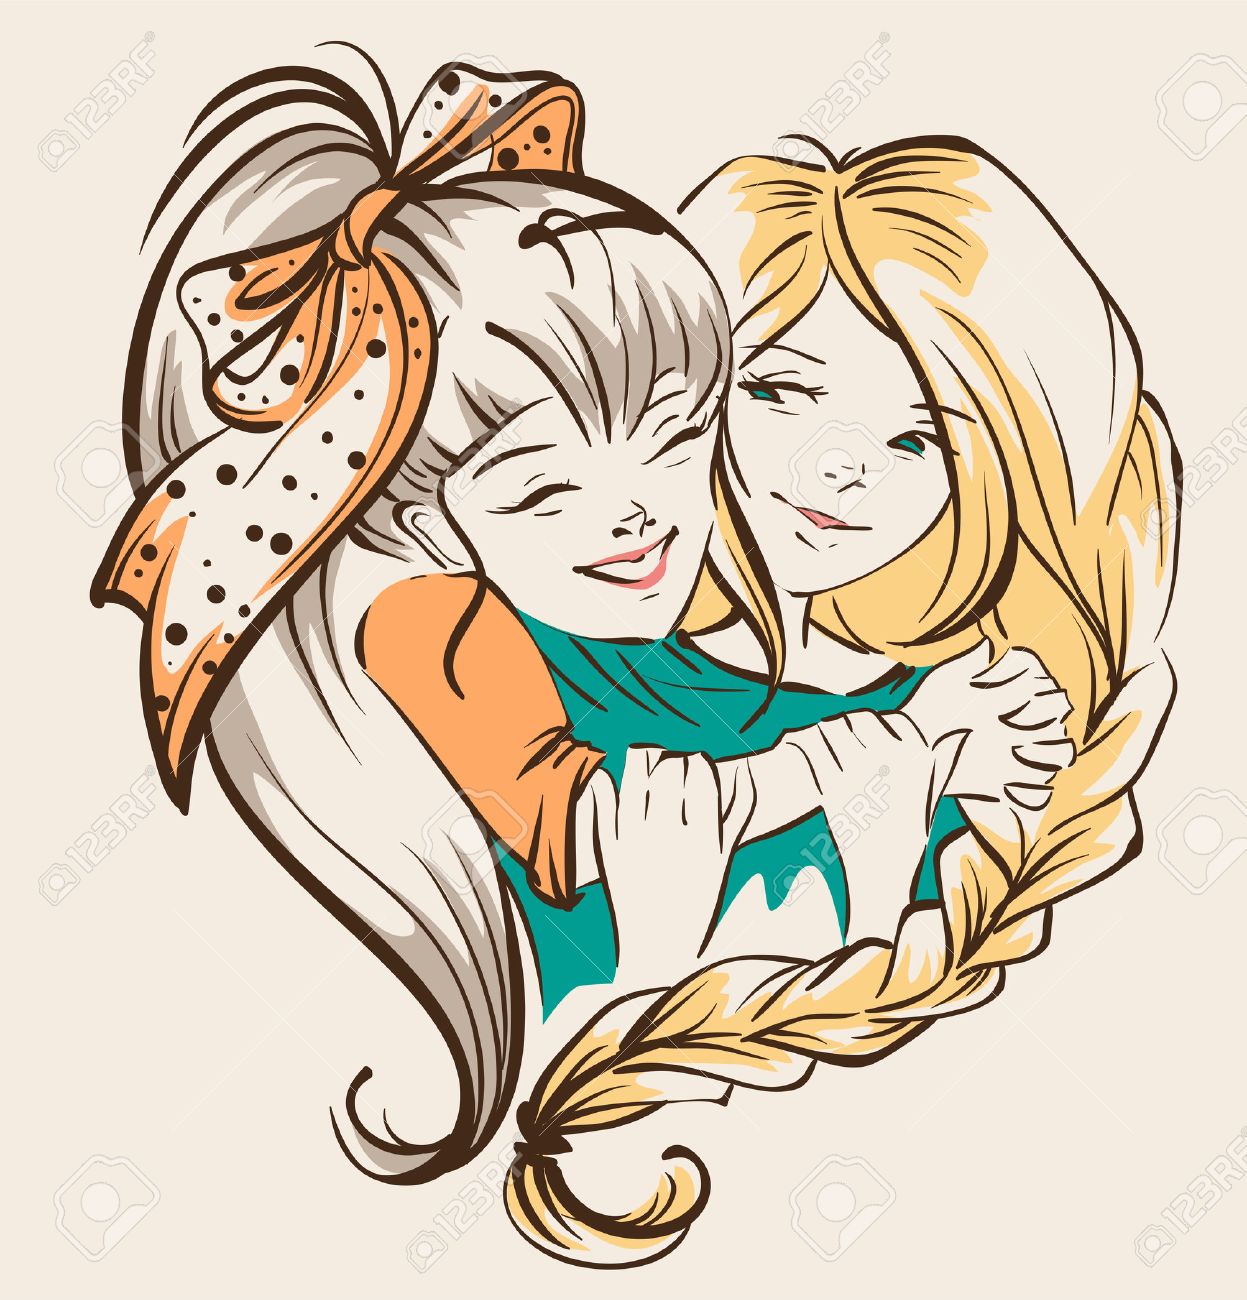 Sisters hugging clipart